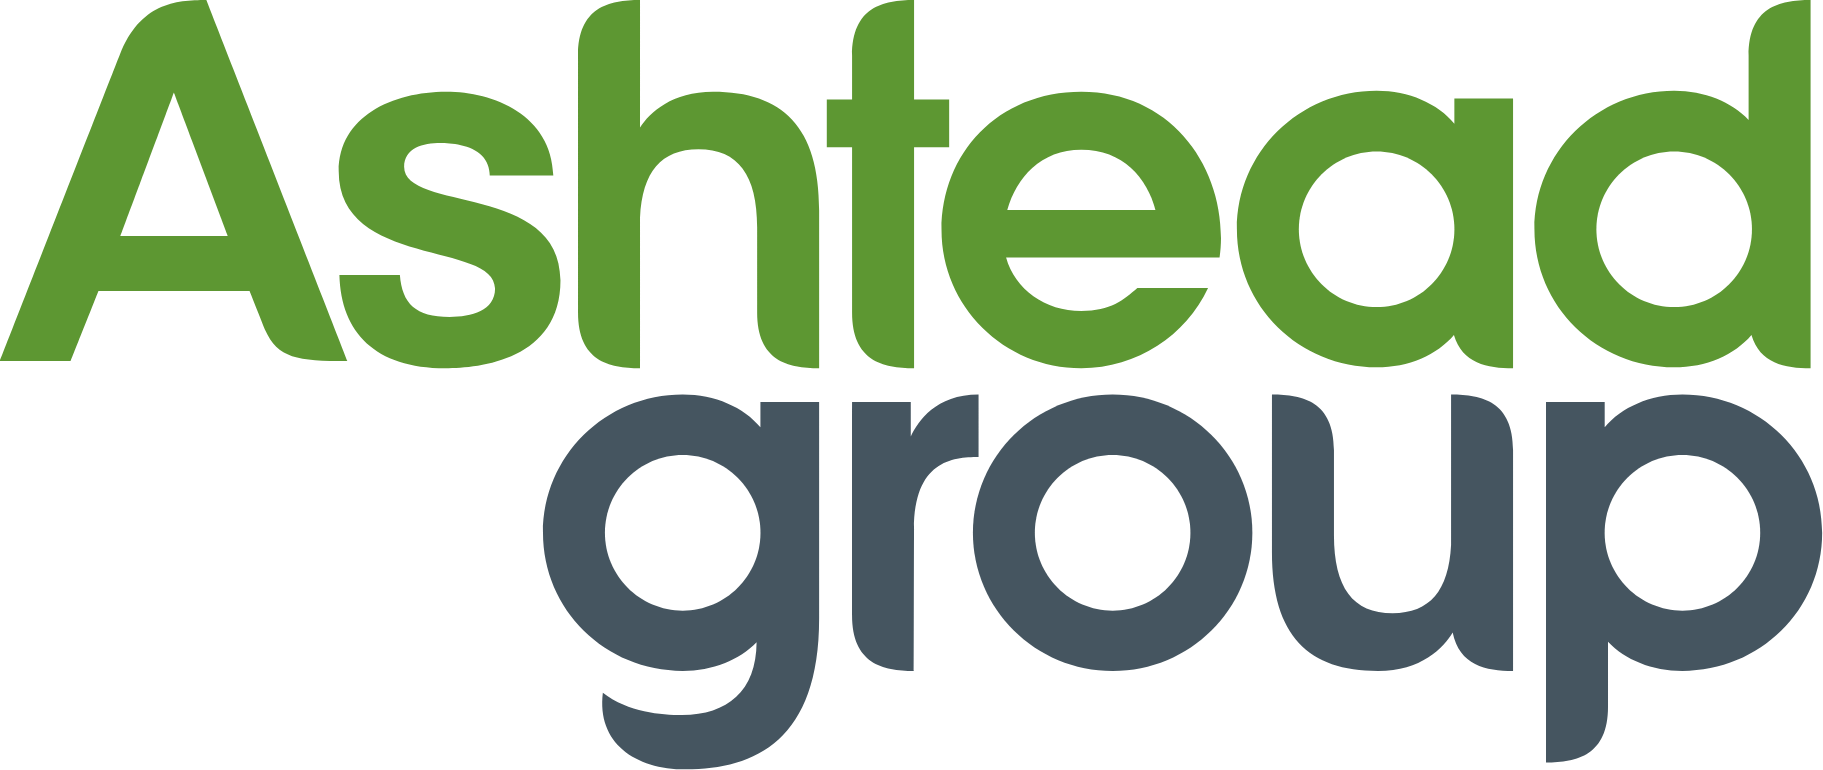 Ashtead logo large (transparent PNG)